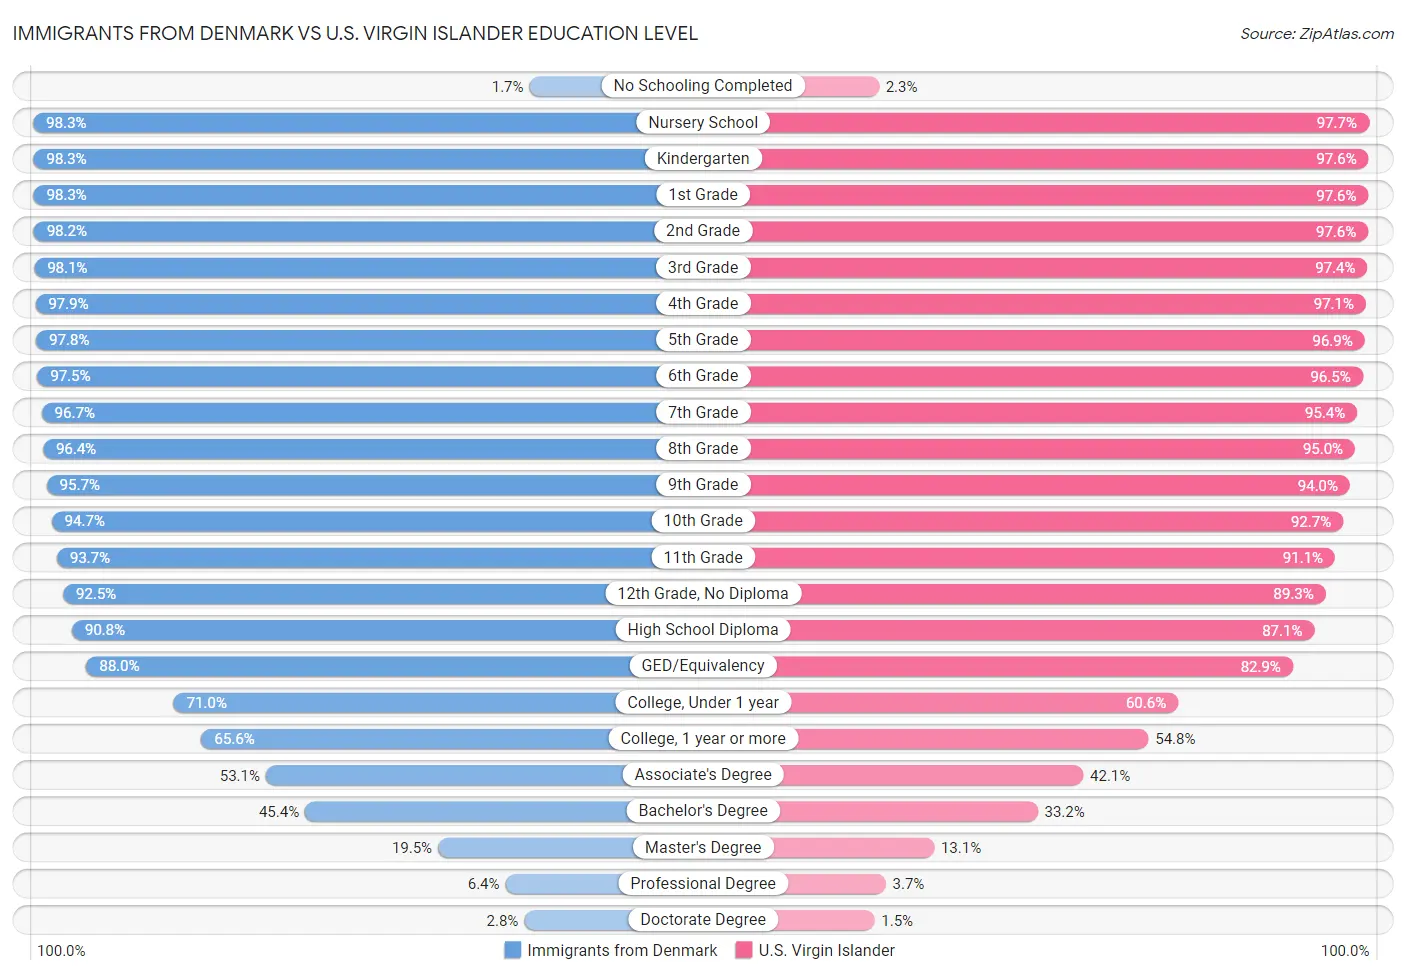 Immigrants from Denmark vs U.S. Virgin Islander Education Level